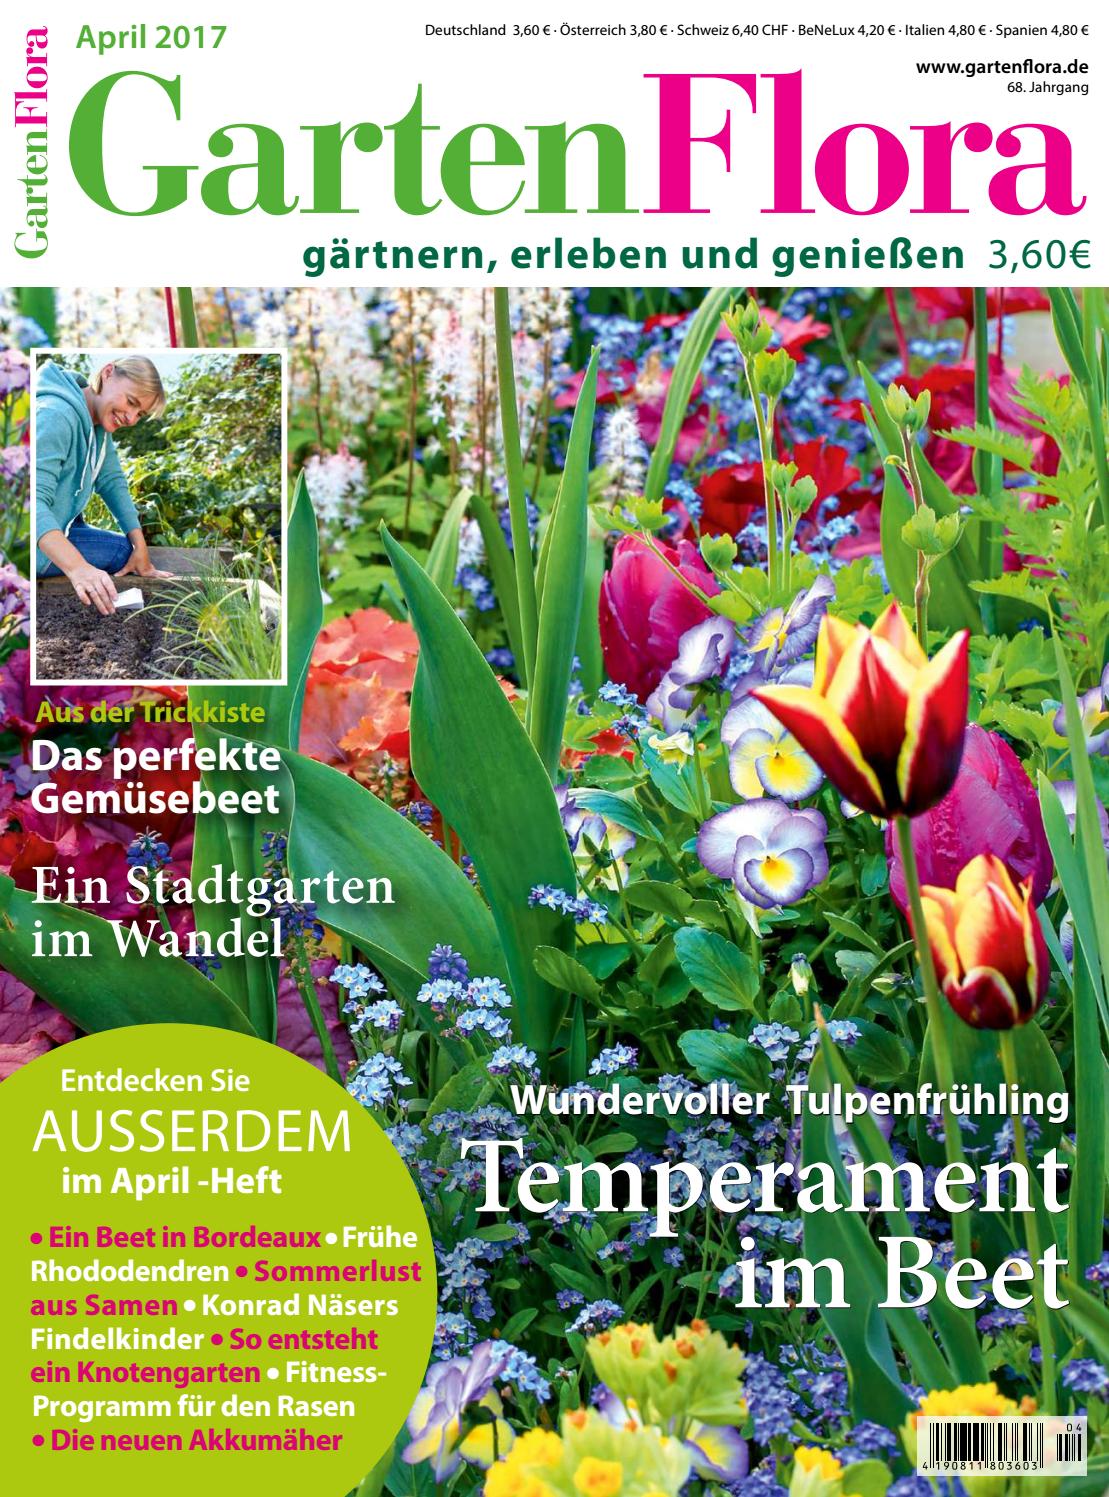 Rost Deko Garten Deutschland Elegant Cfcfcfcfecefcefy by Elcicario43 issuu